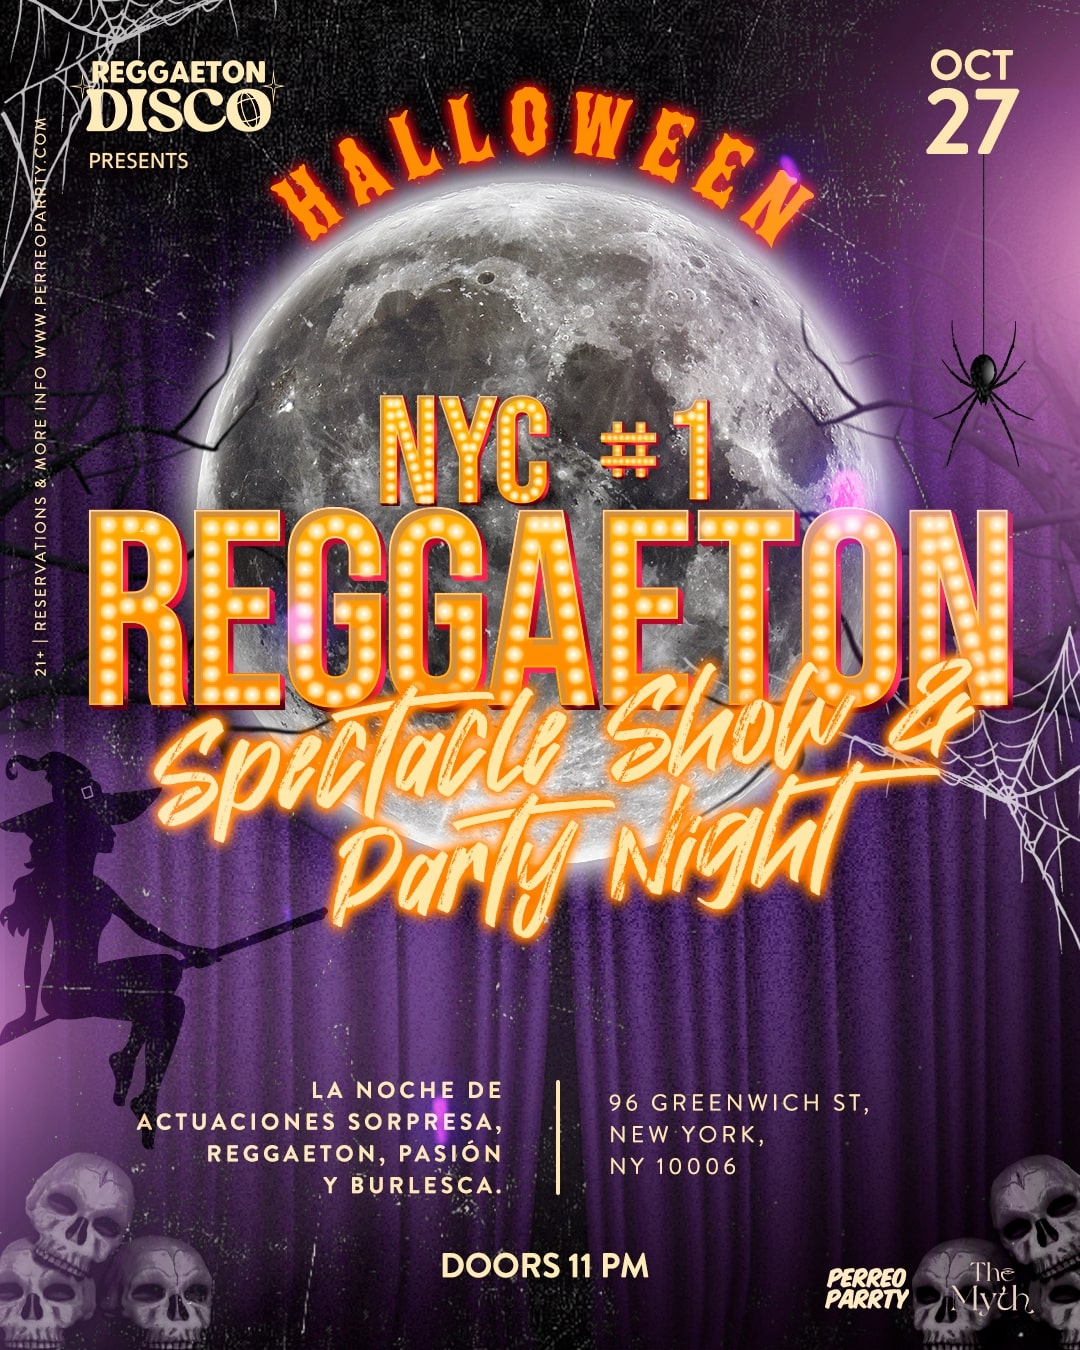 REGGAETON DISCO - HALLOWEEN EDITION - Variety Show & Party Night NYC